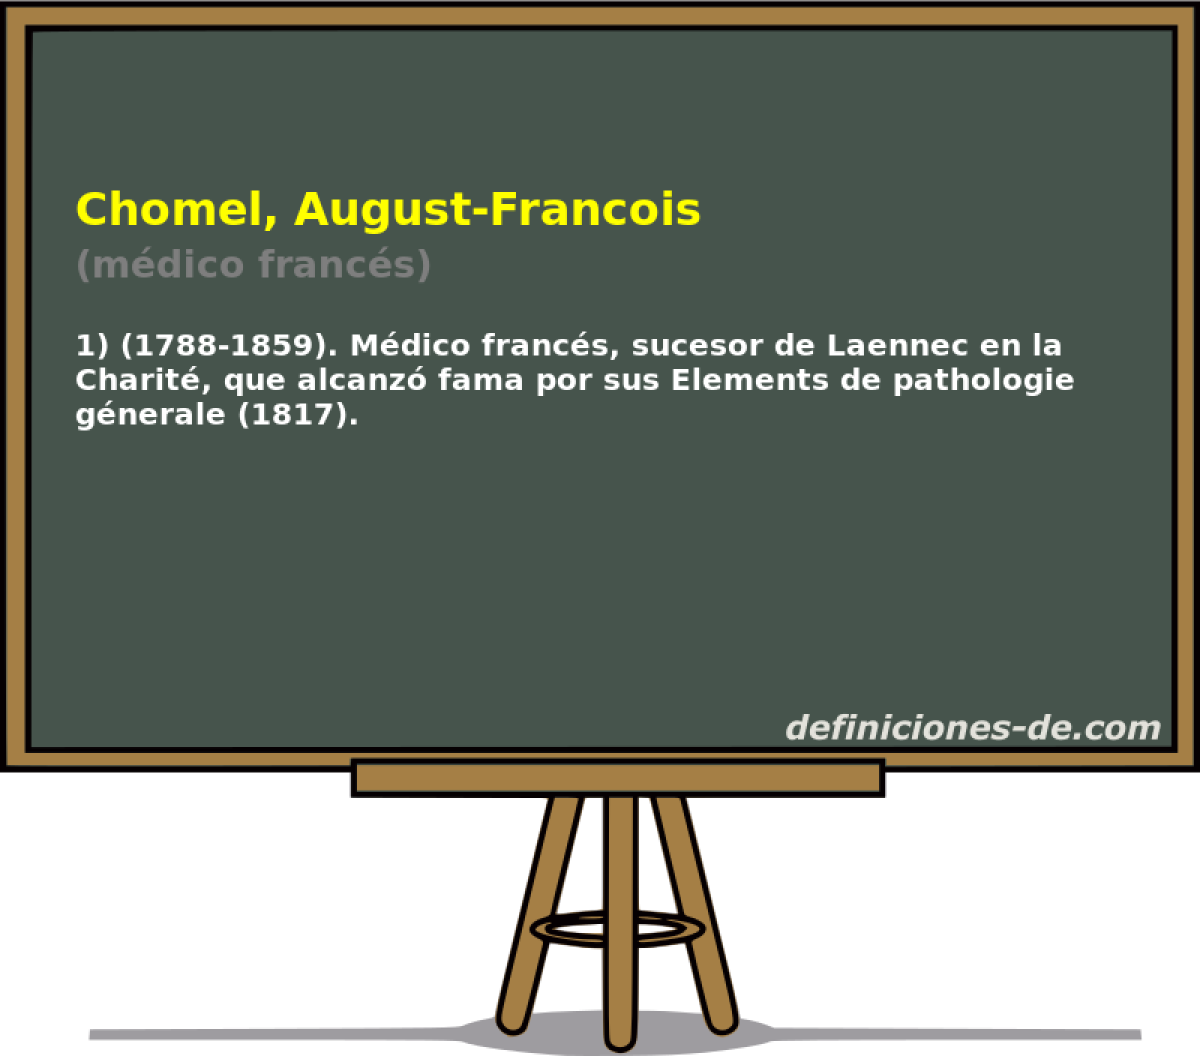 Chomel, August-Francois (mdico francs)